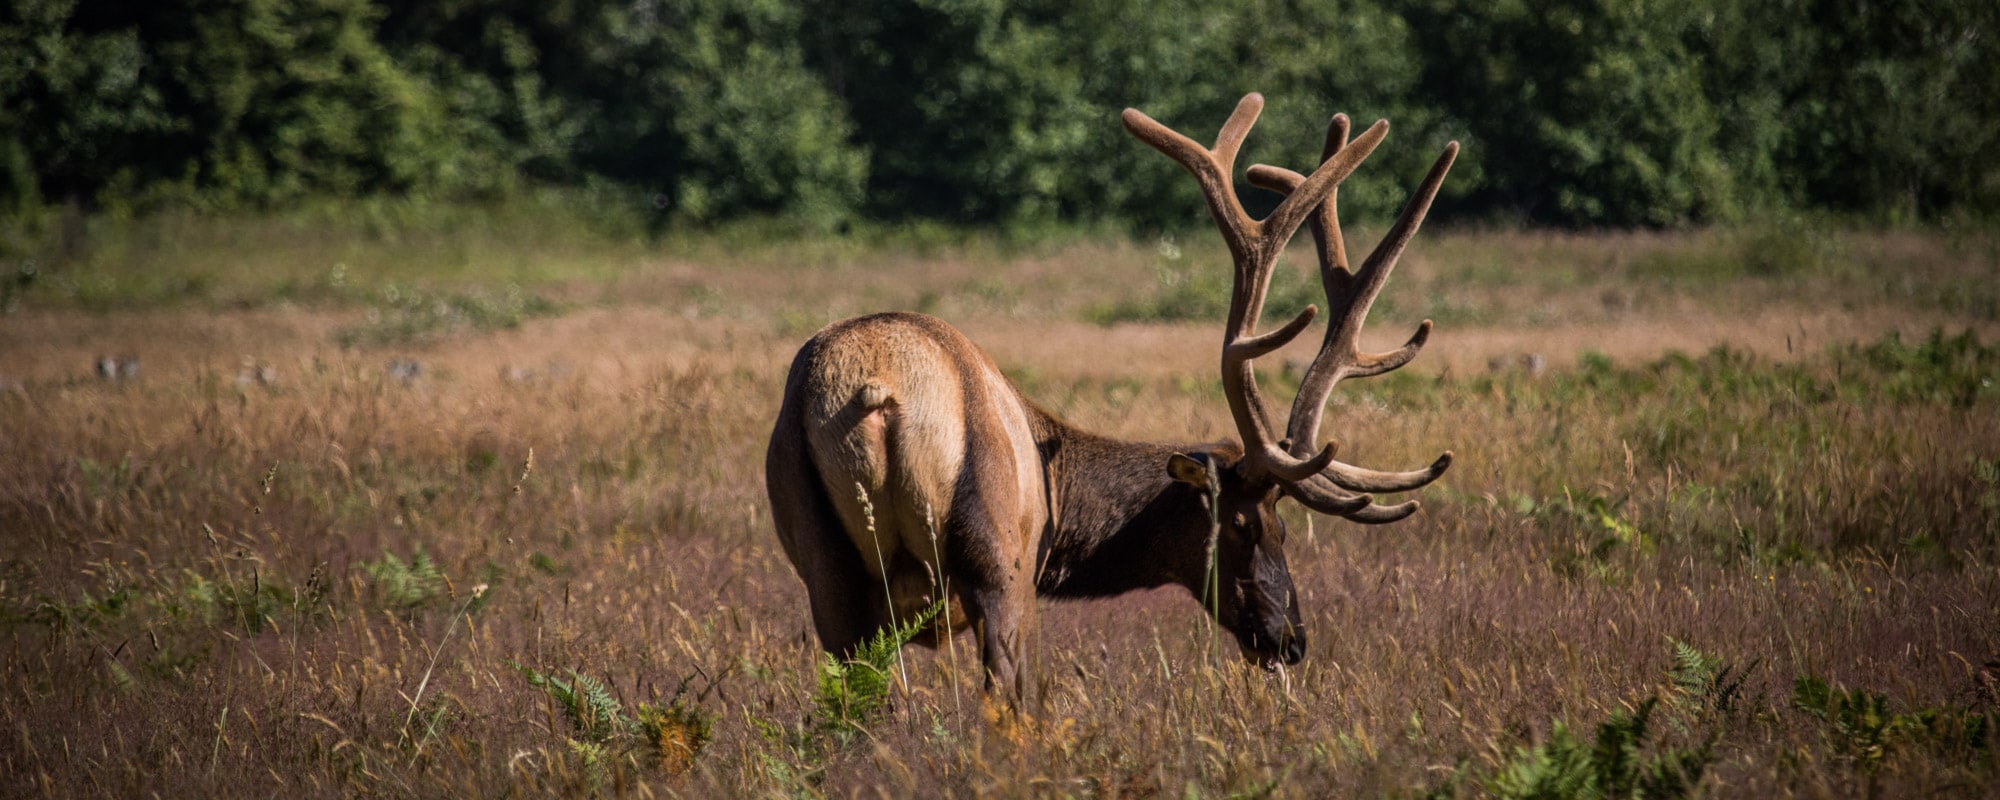 Redwood National Park - Banner Elk Prairie